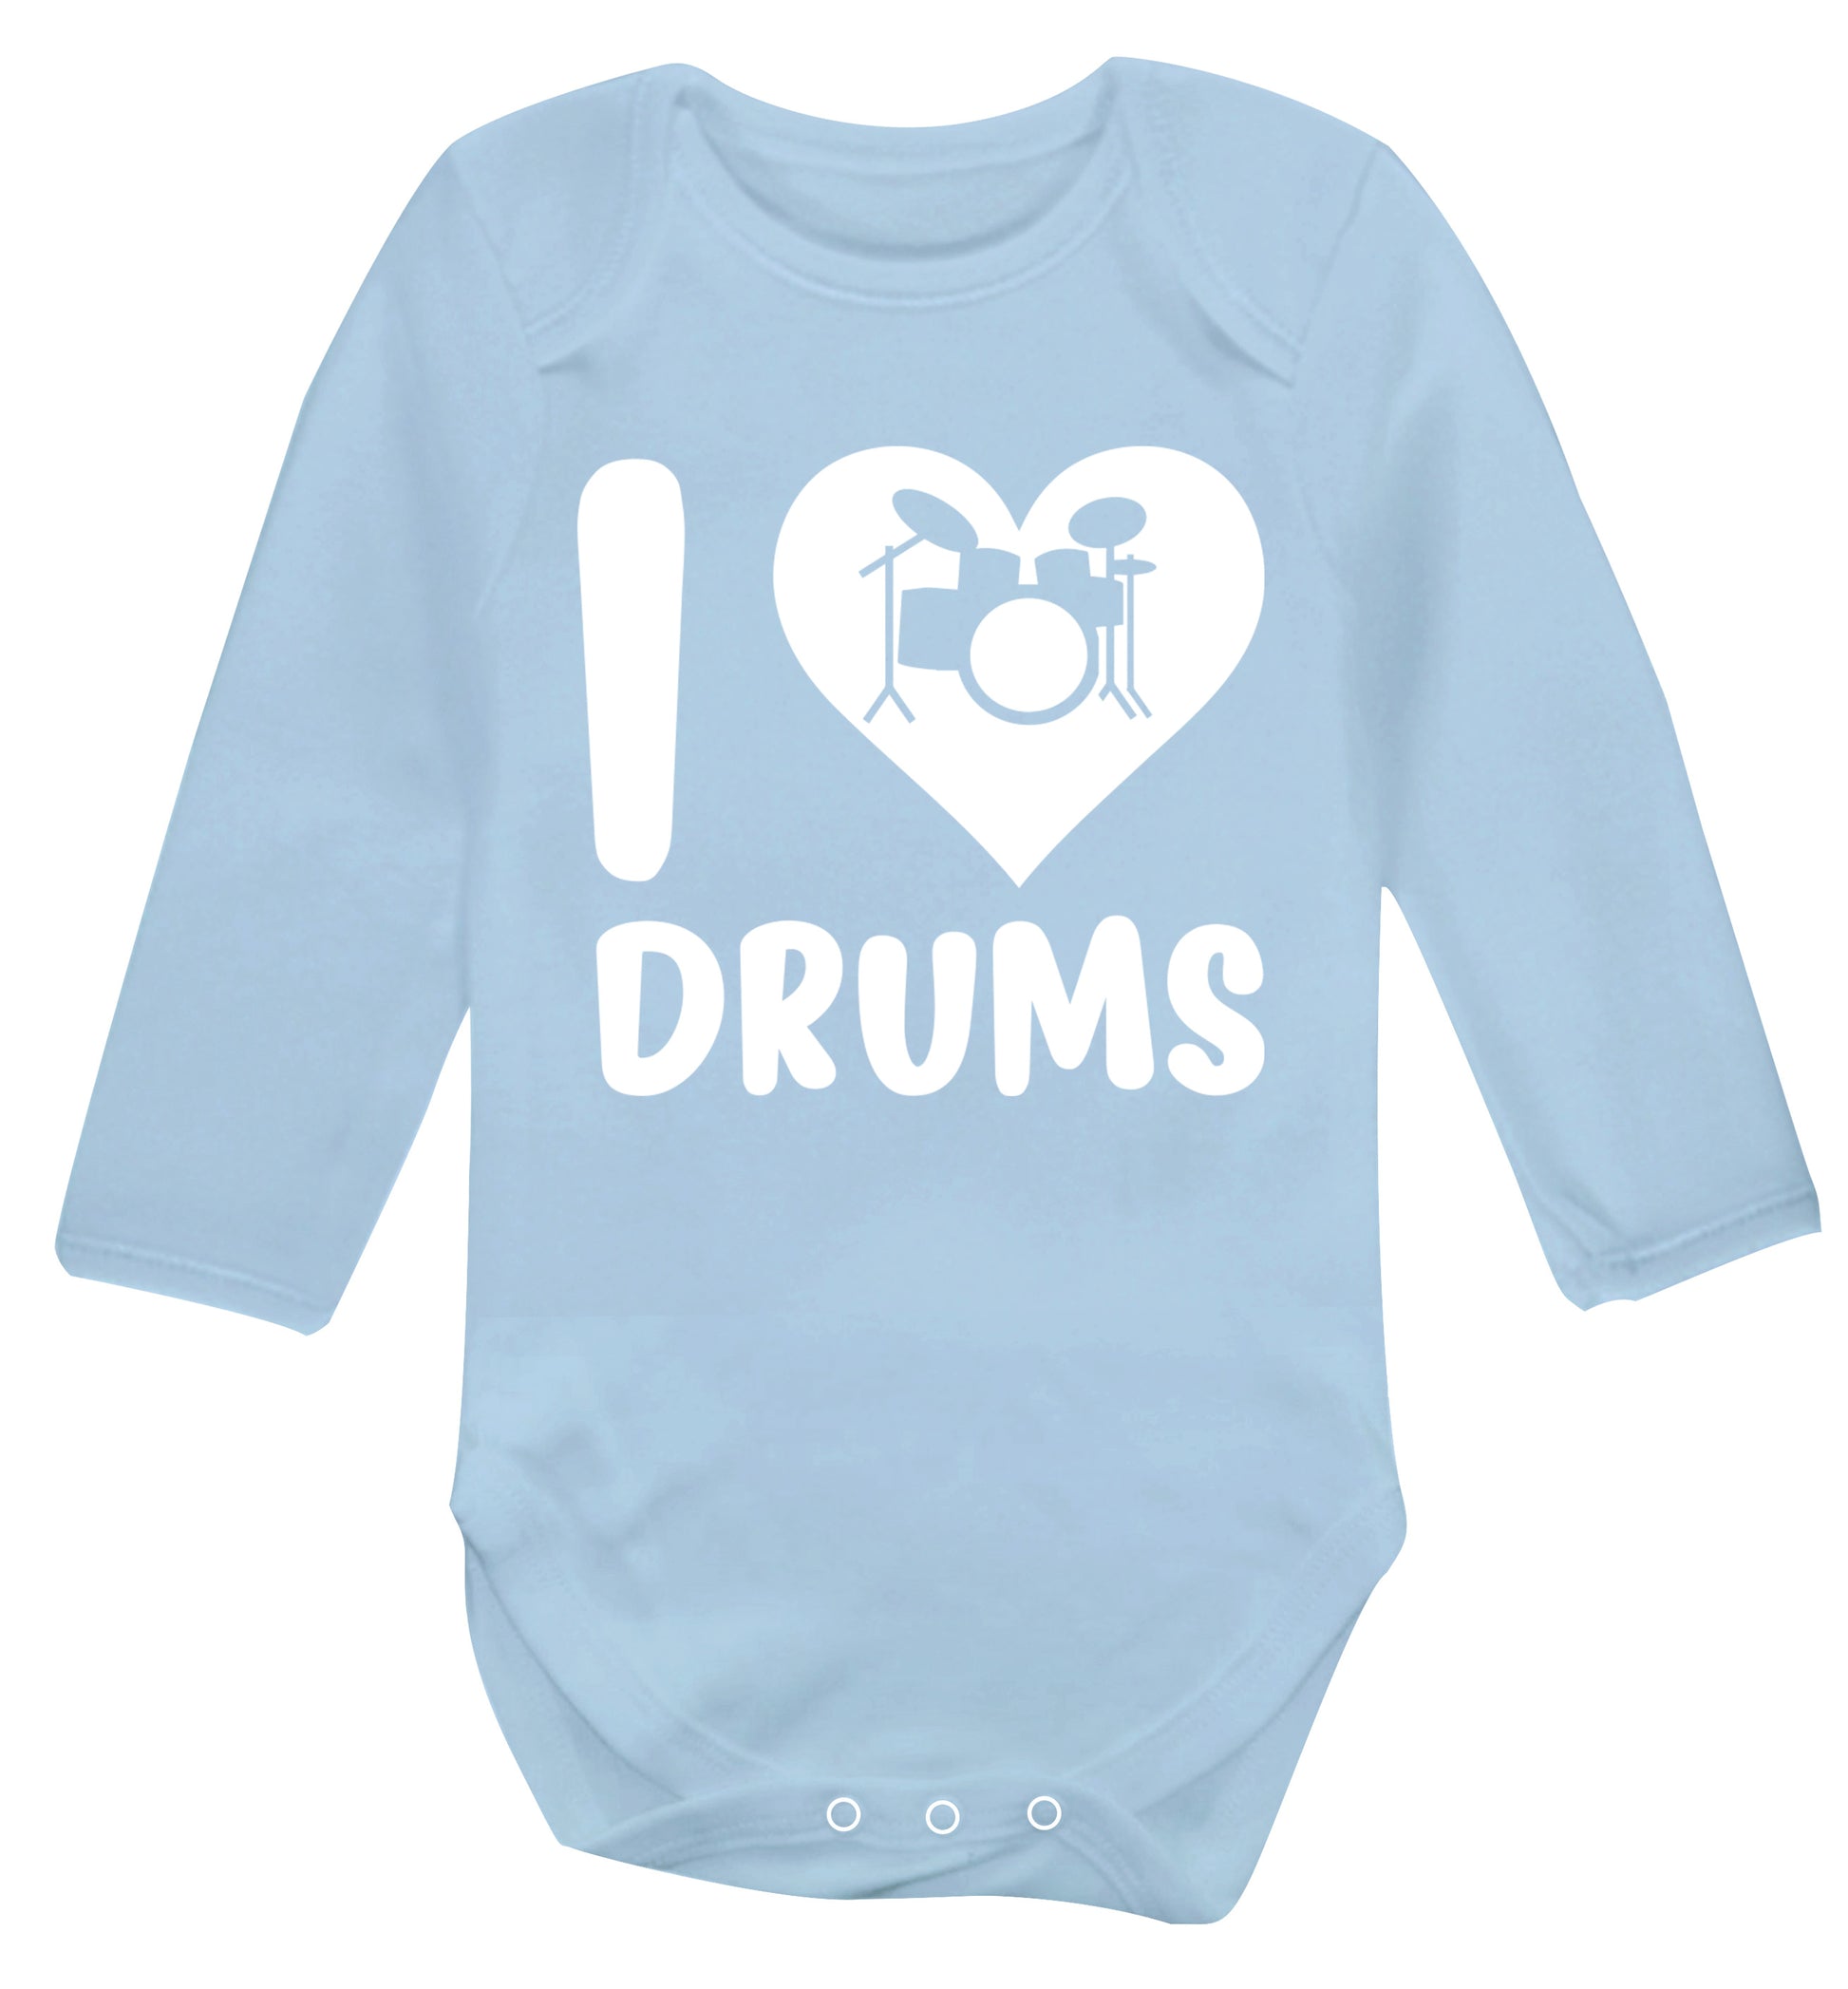 I love drums Baby Vest long sleeved pale blue 6-12 months